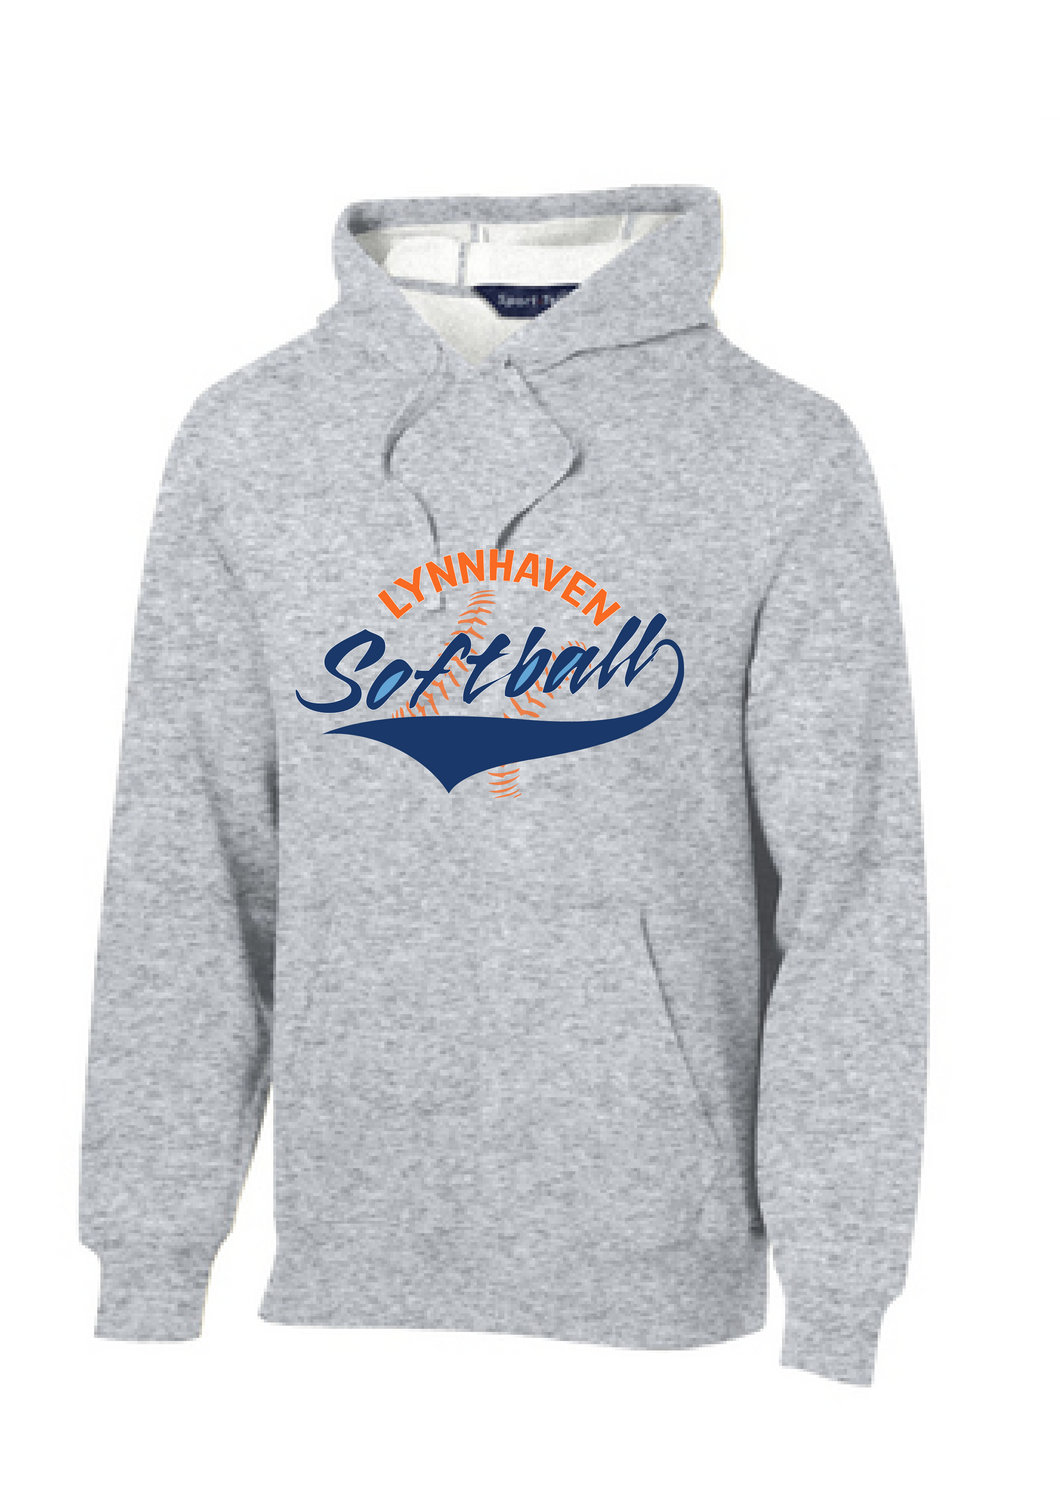 Lynnhaven Softball Fleece Sweatshirt - Fidgety